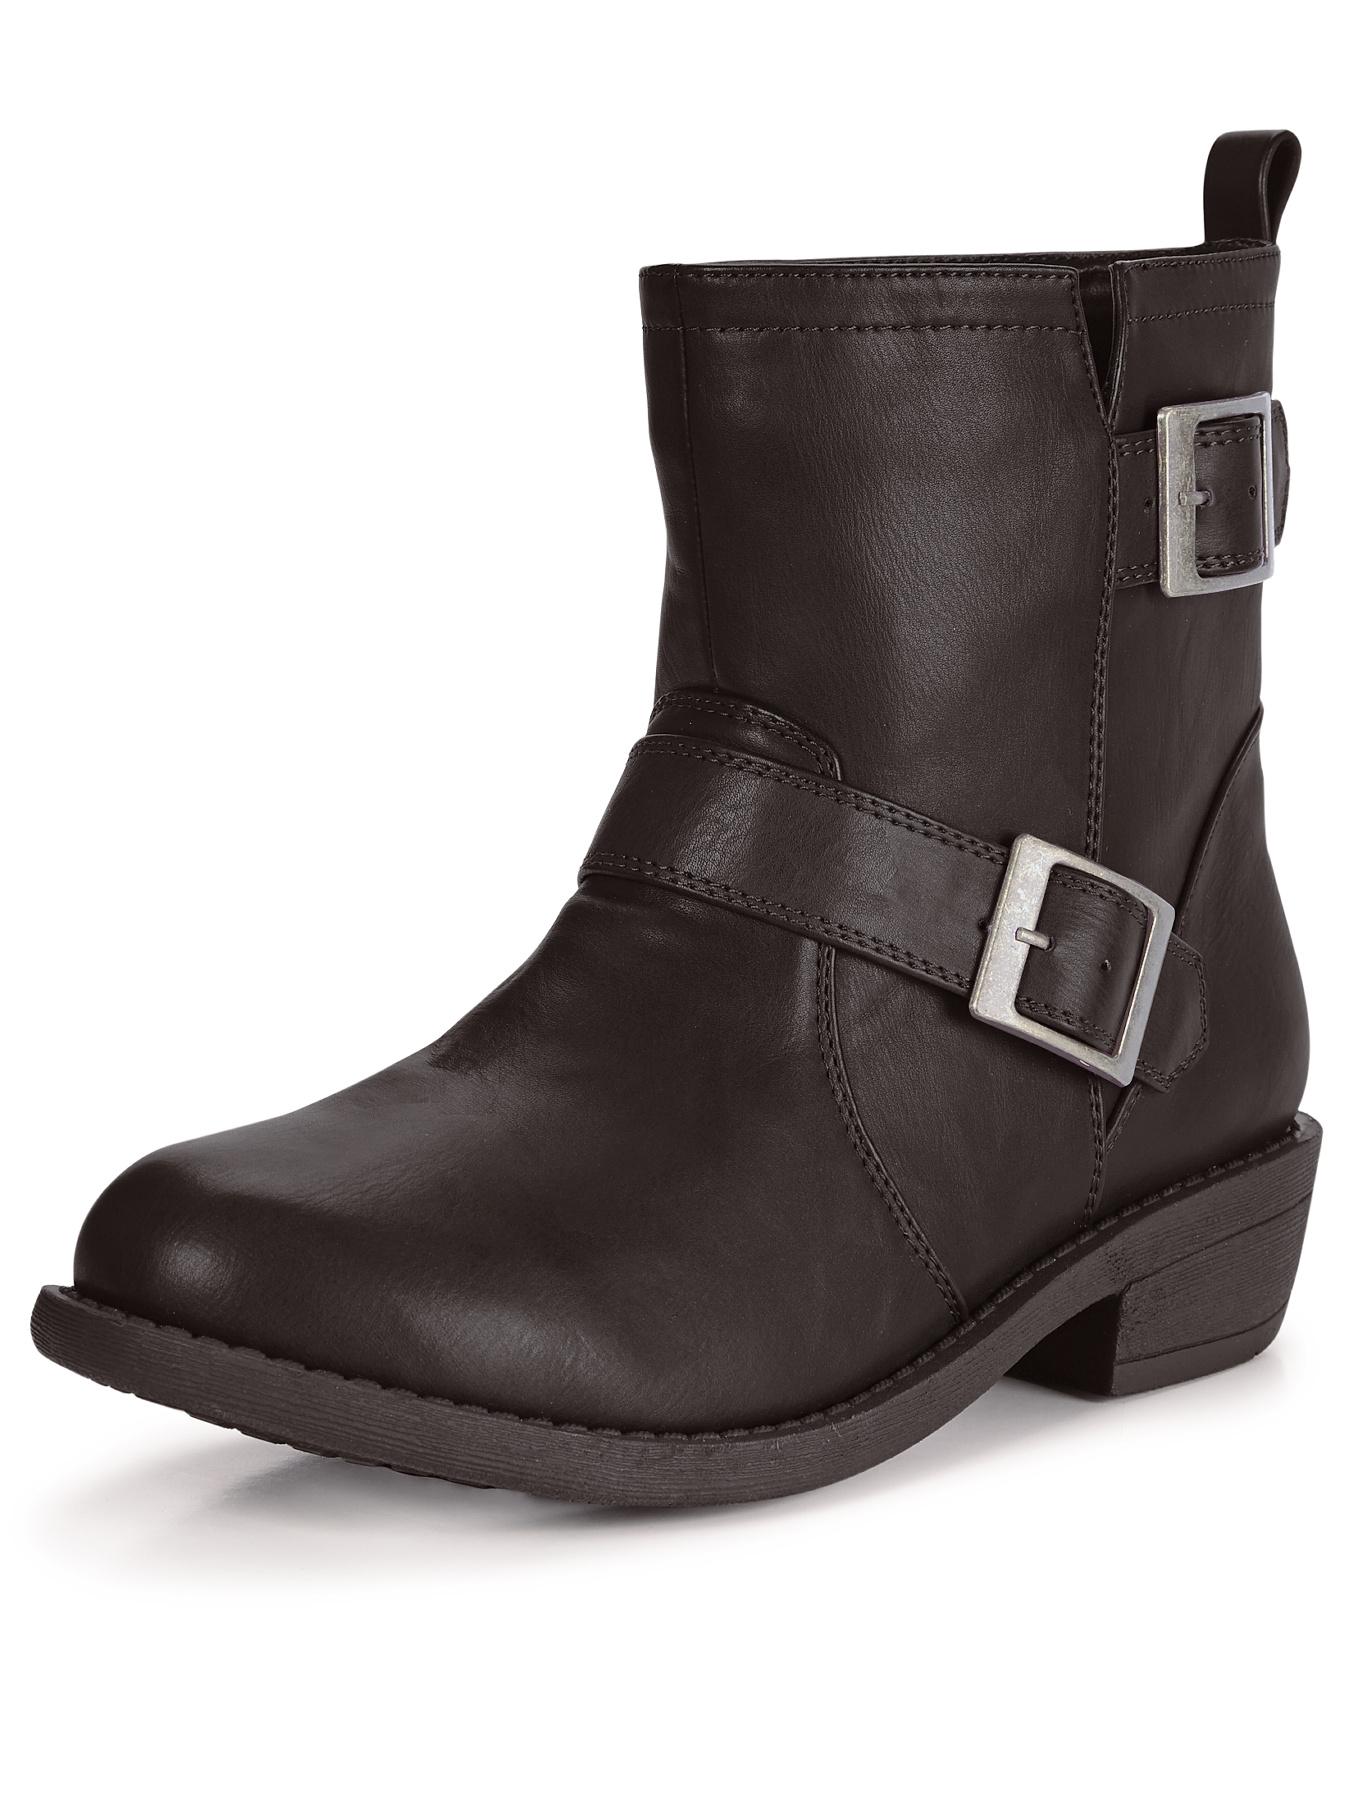 Womens Boots | Boots for Women - Littlewoods